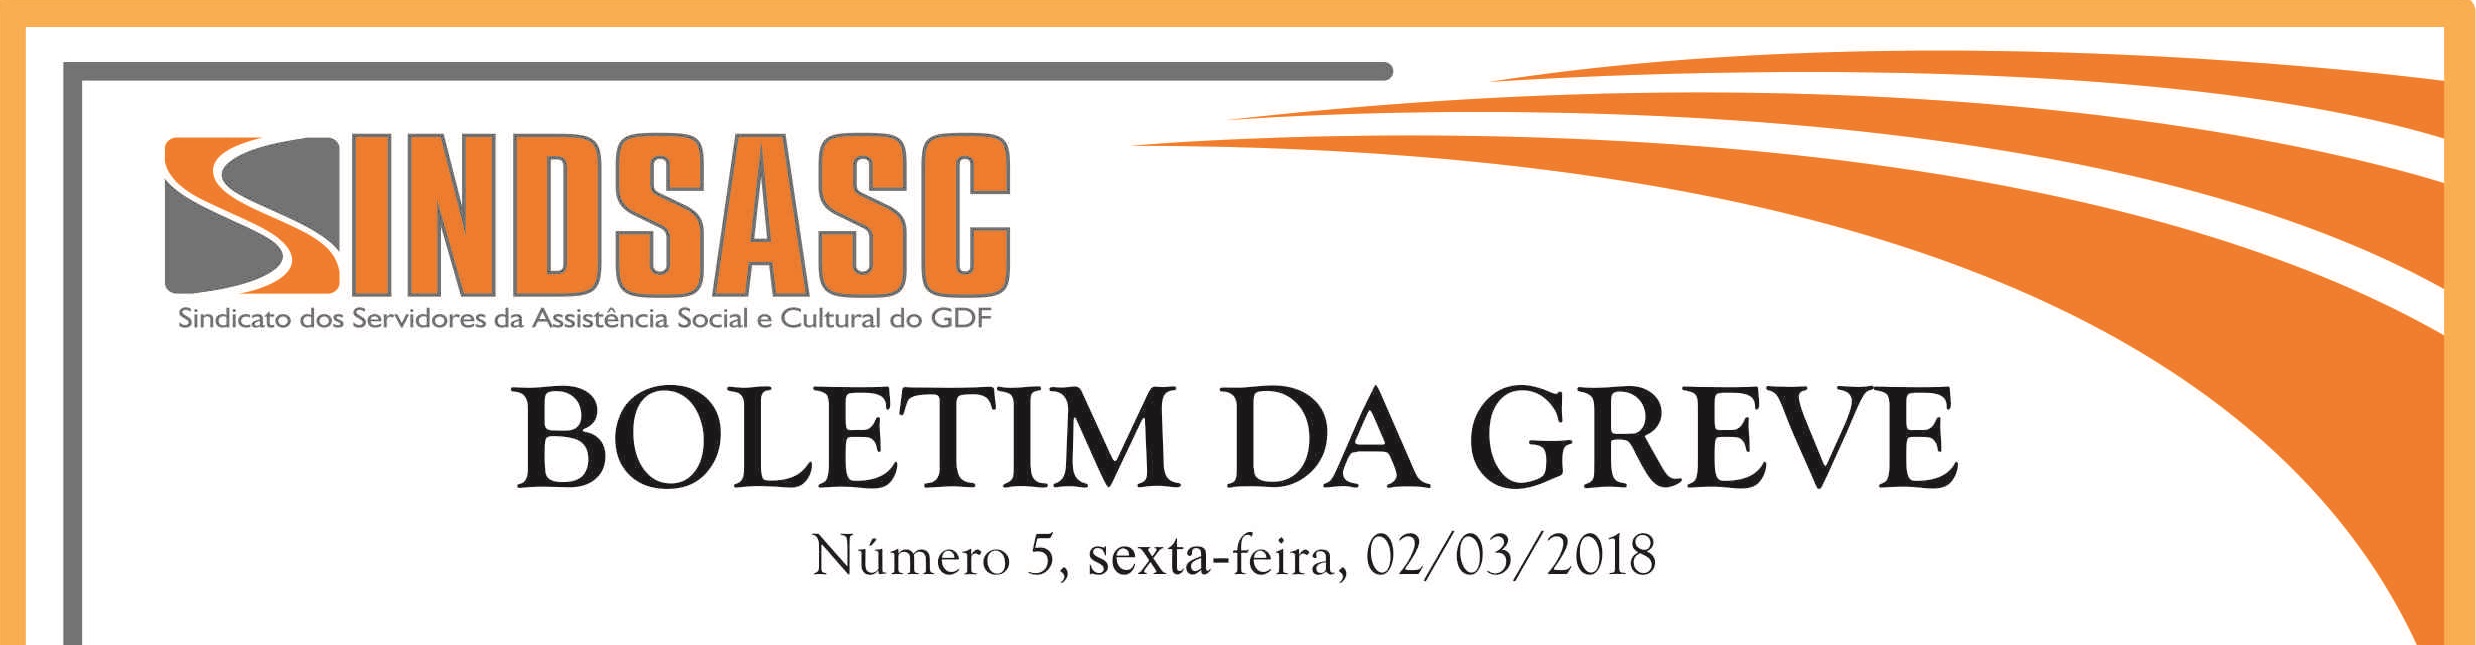 BOLETIM DA GREVE - NÚMERO 5 - SEXTA-FEIRA - 02/03/2018